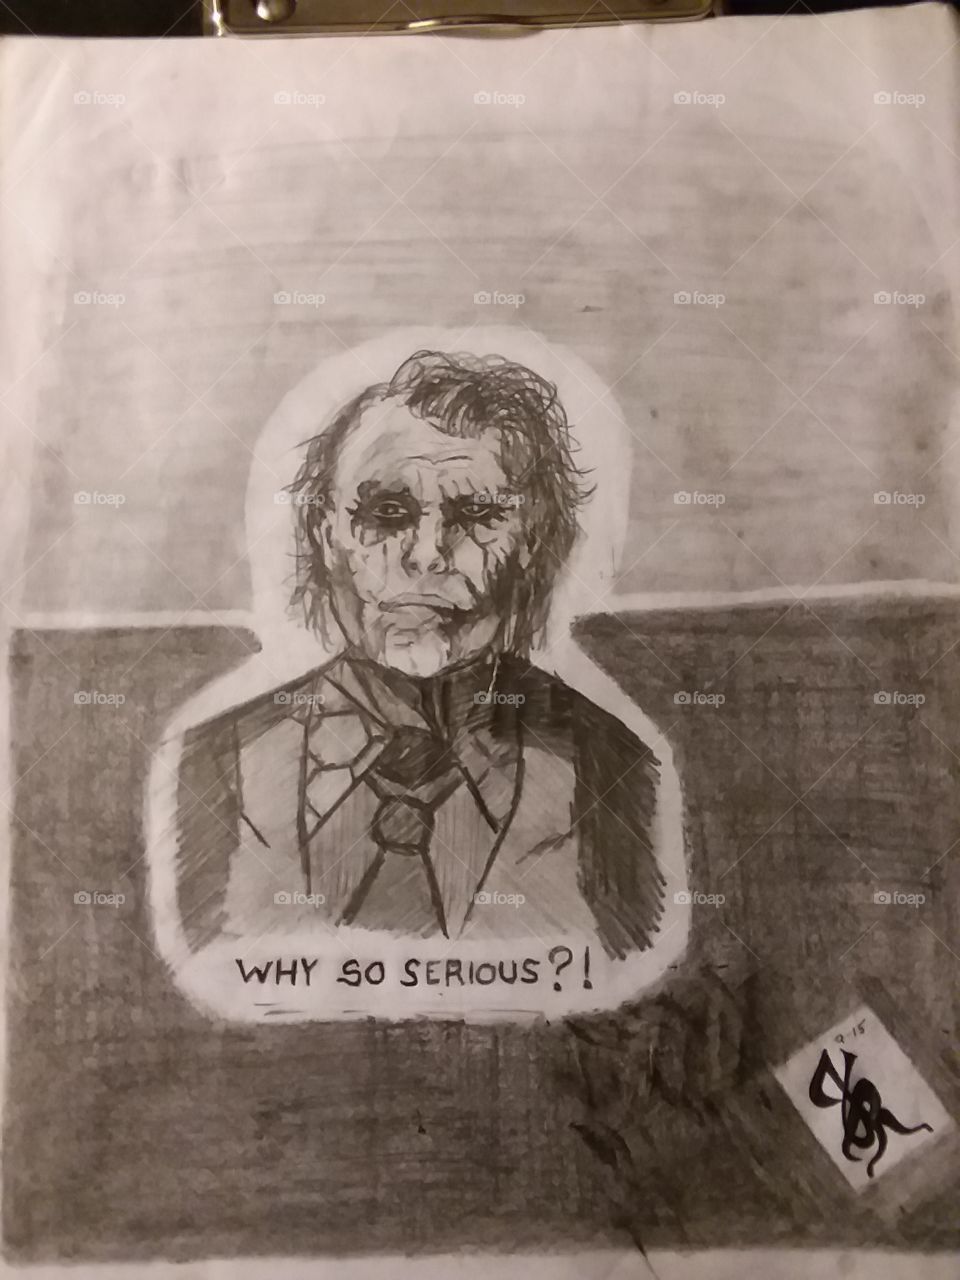 My Pencil Drawings; Joker: Why So Serious?